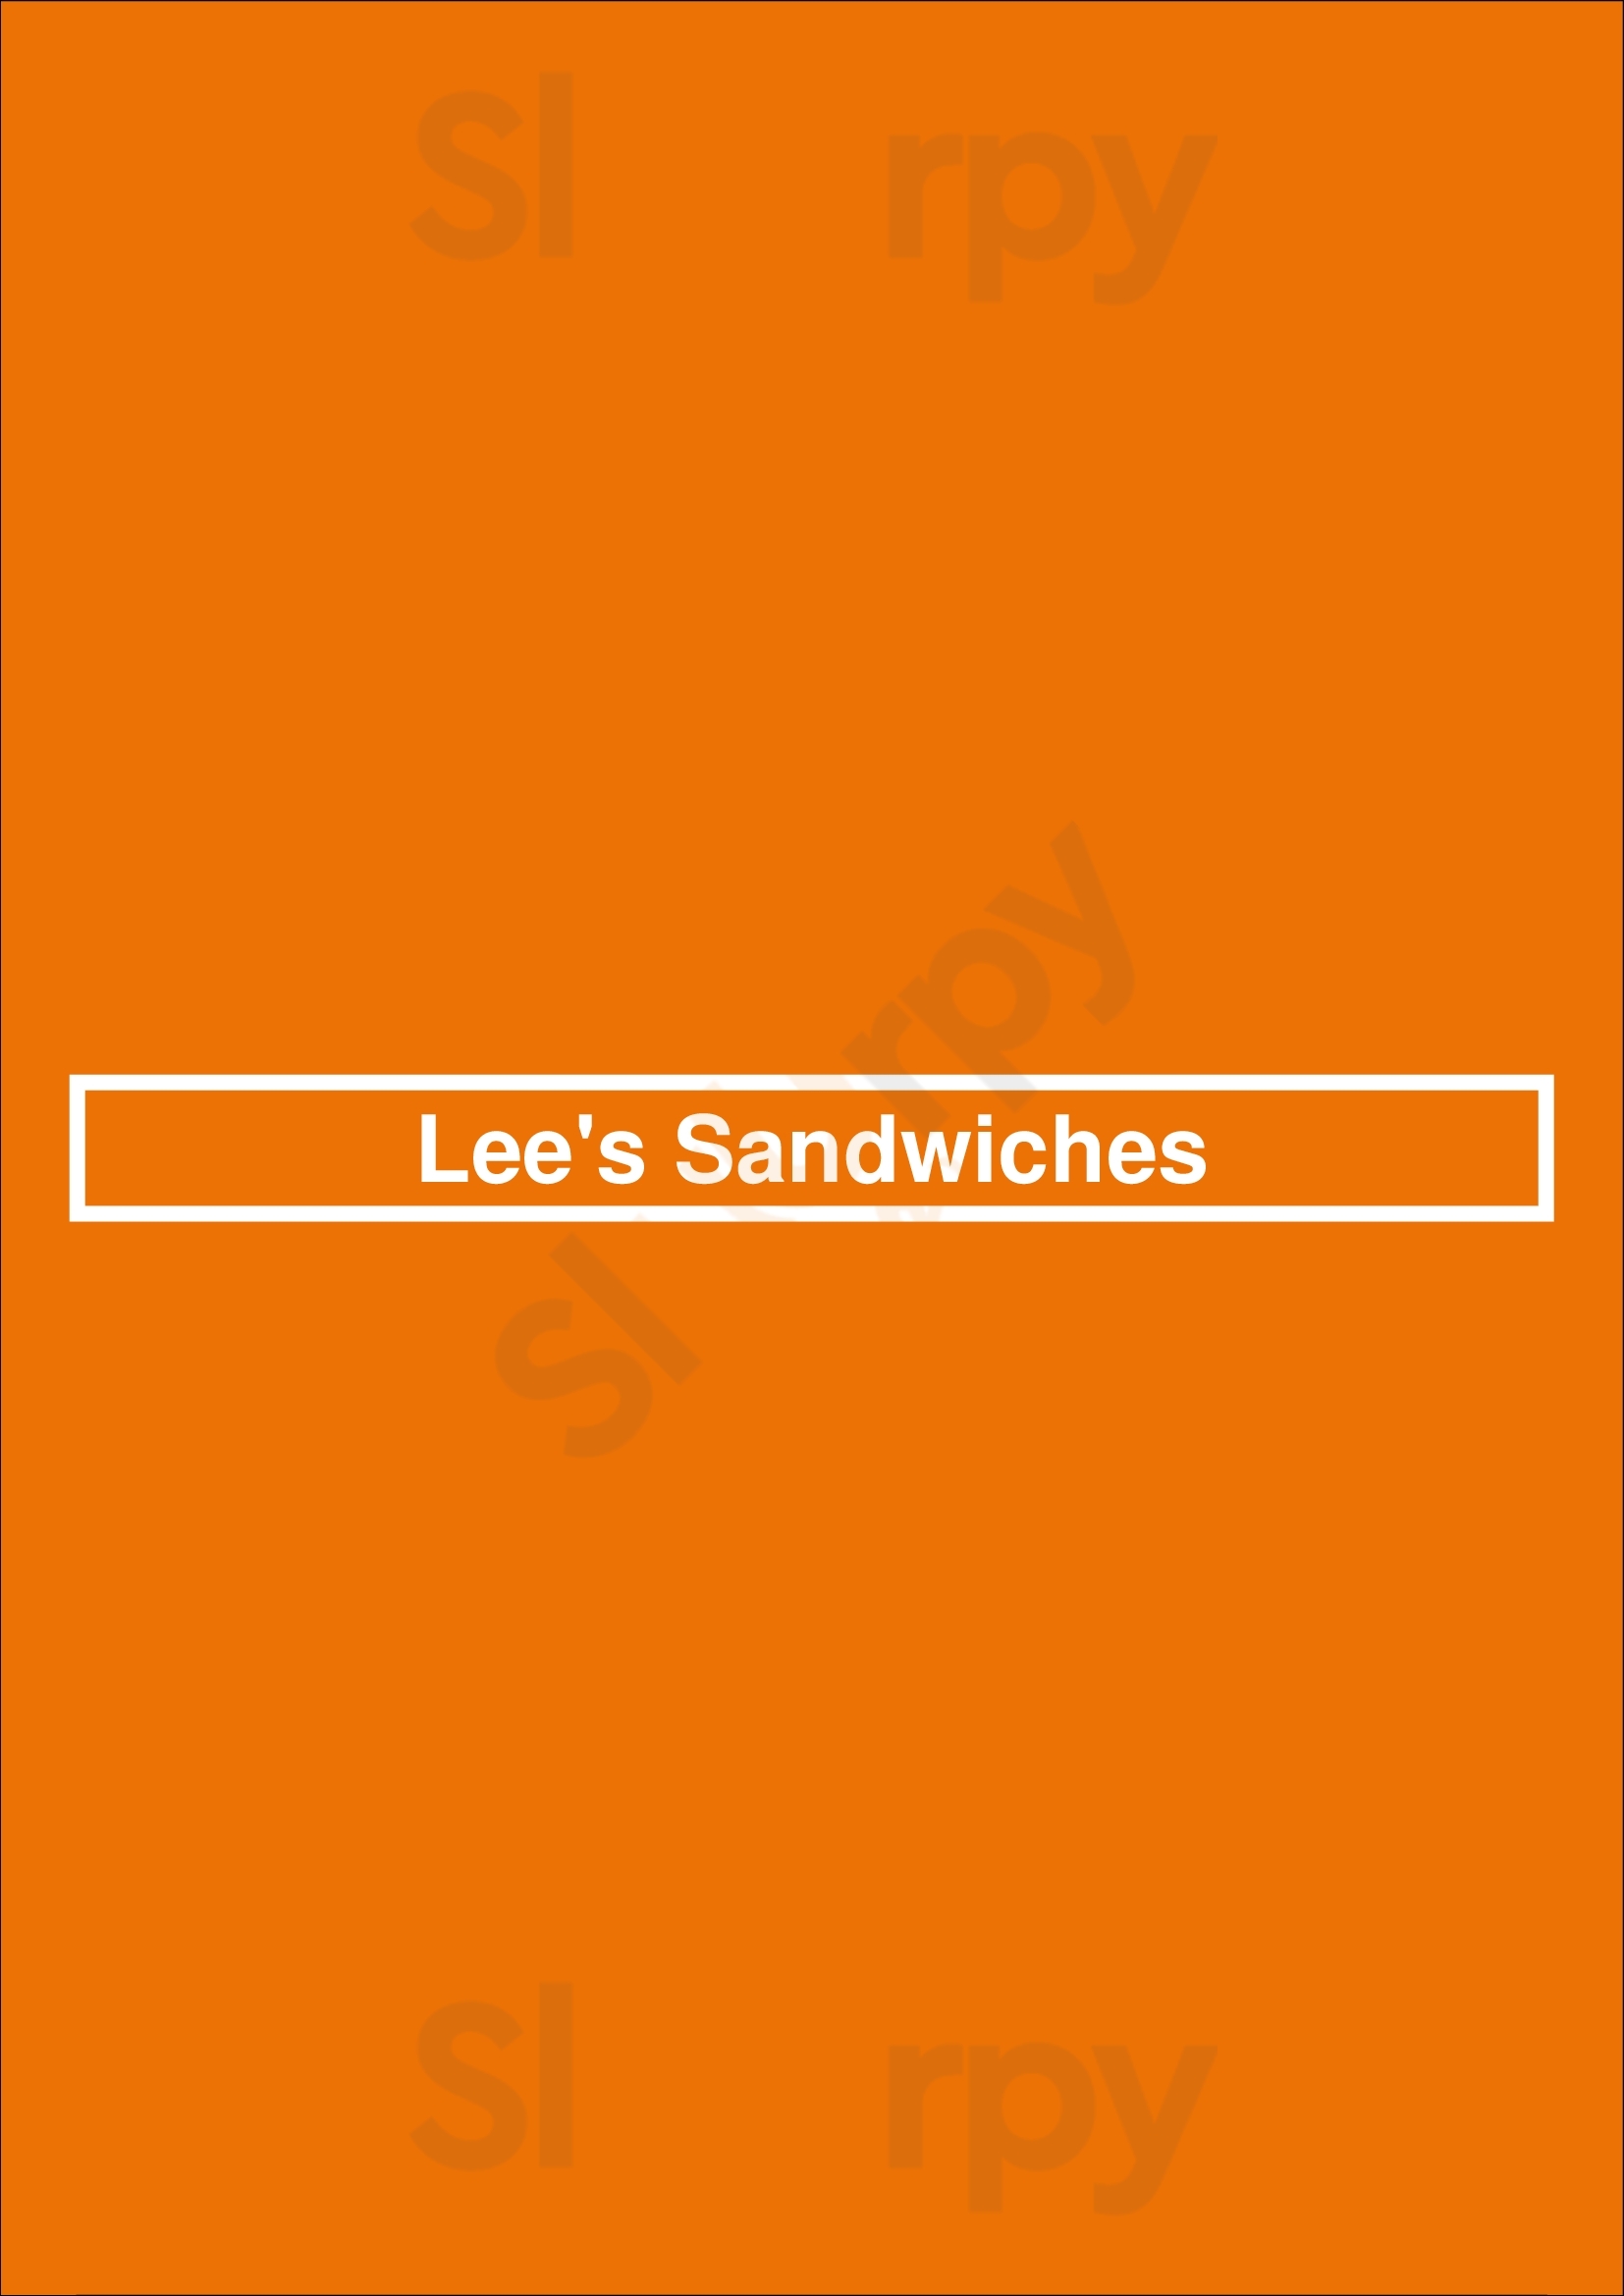 Lee's Sandwiches Westminster Menu - 1